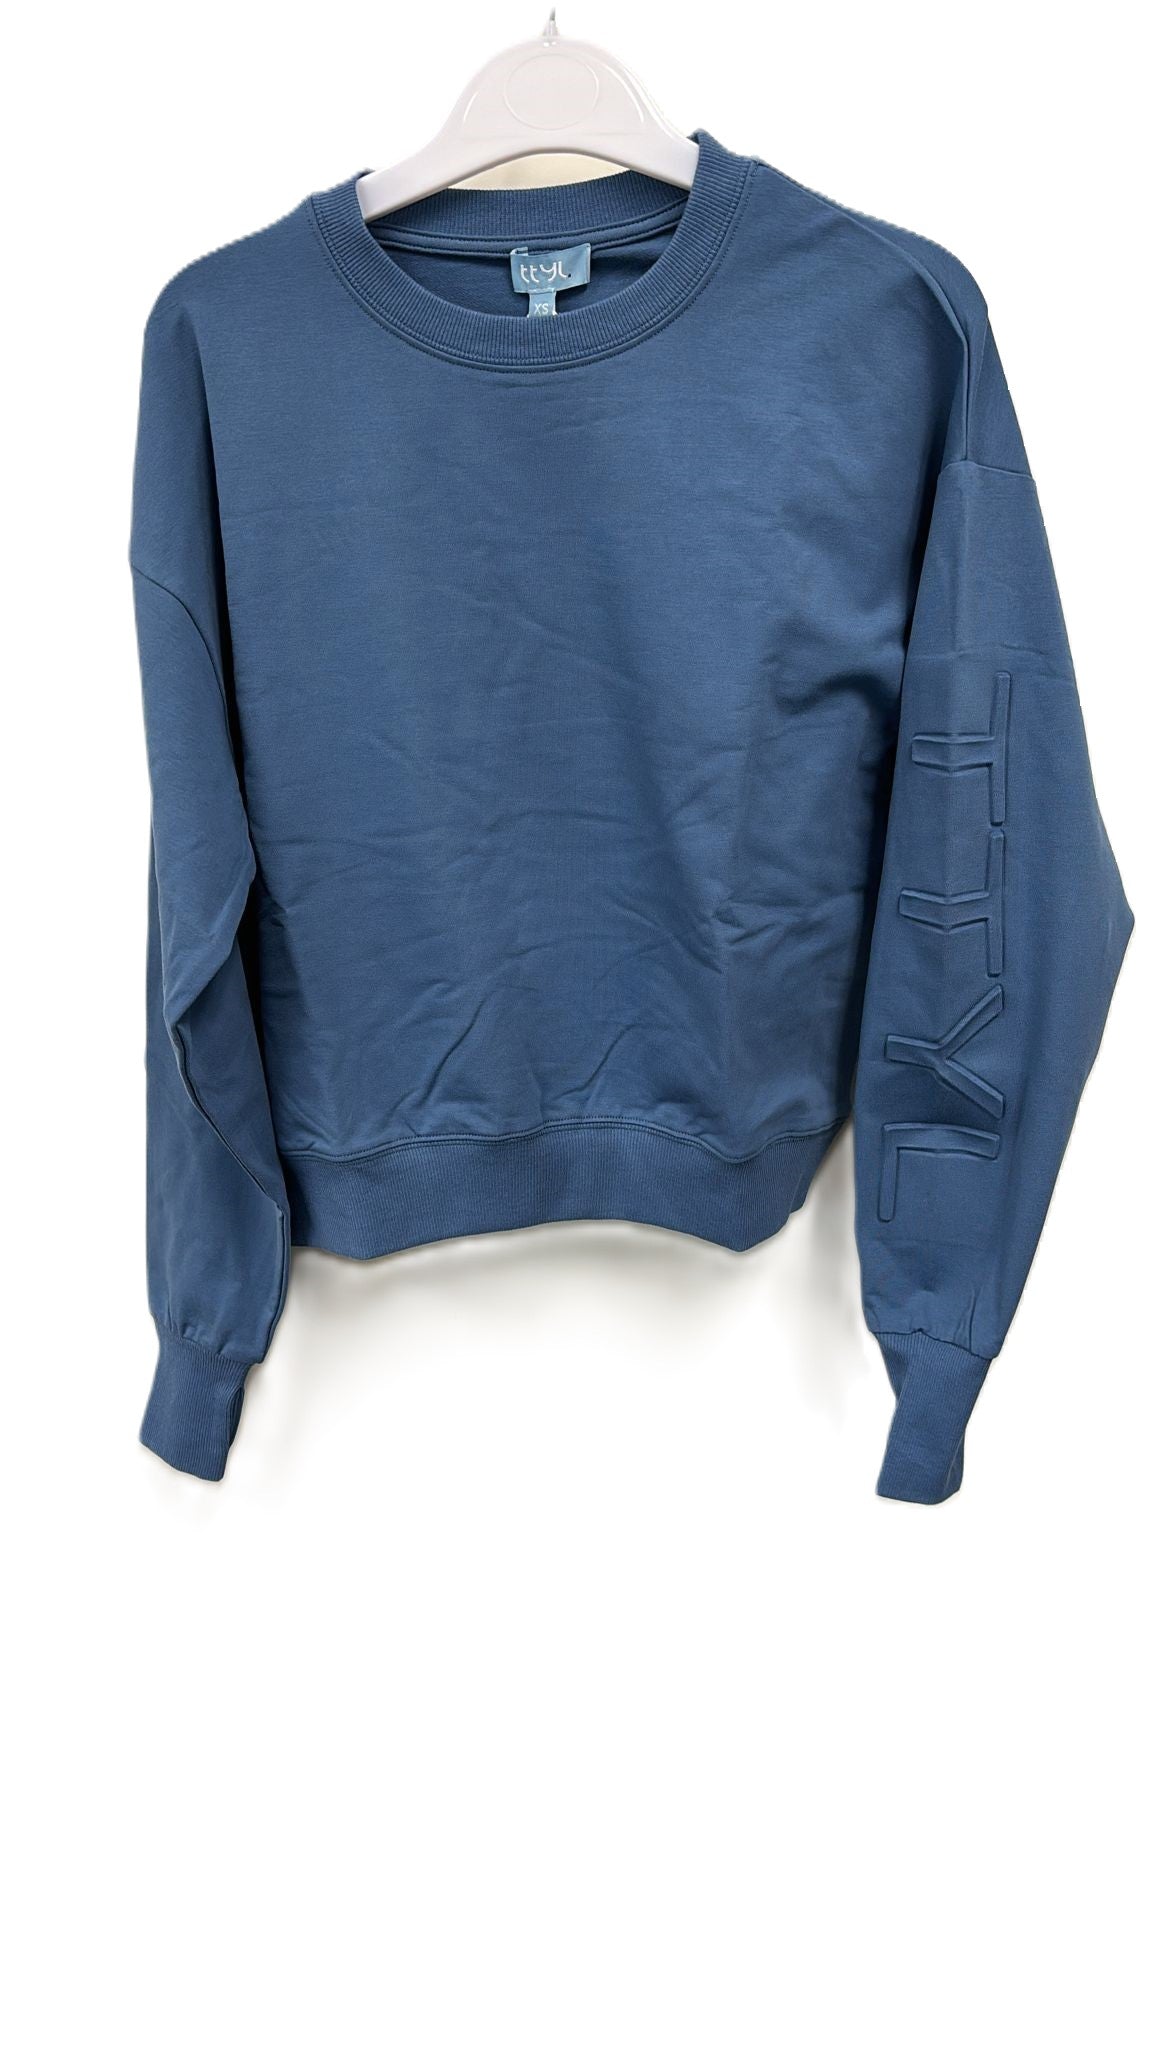 Inky Blue Sweatshirt